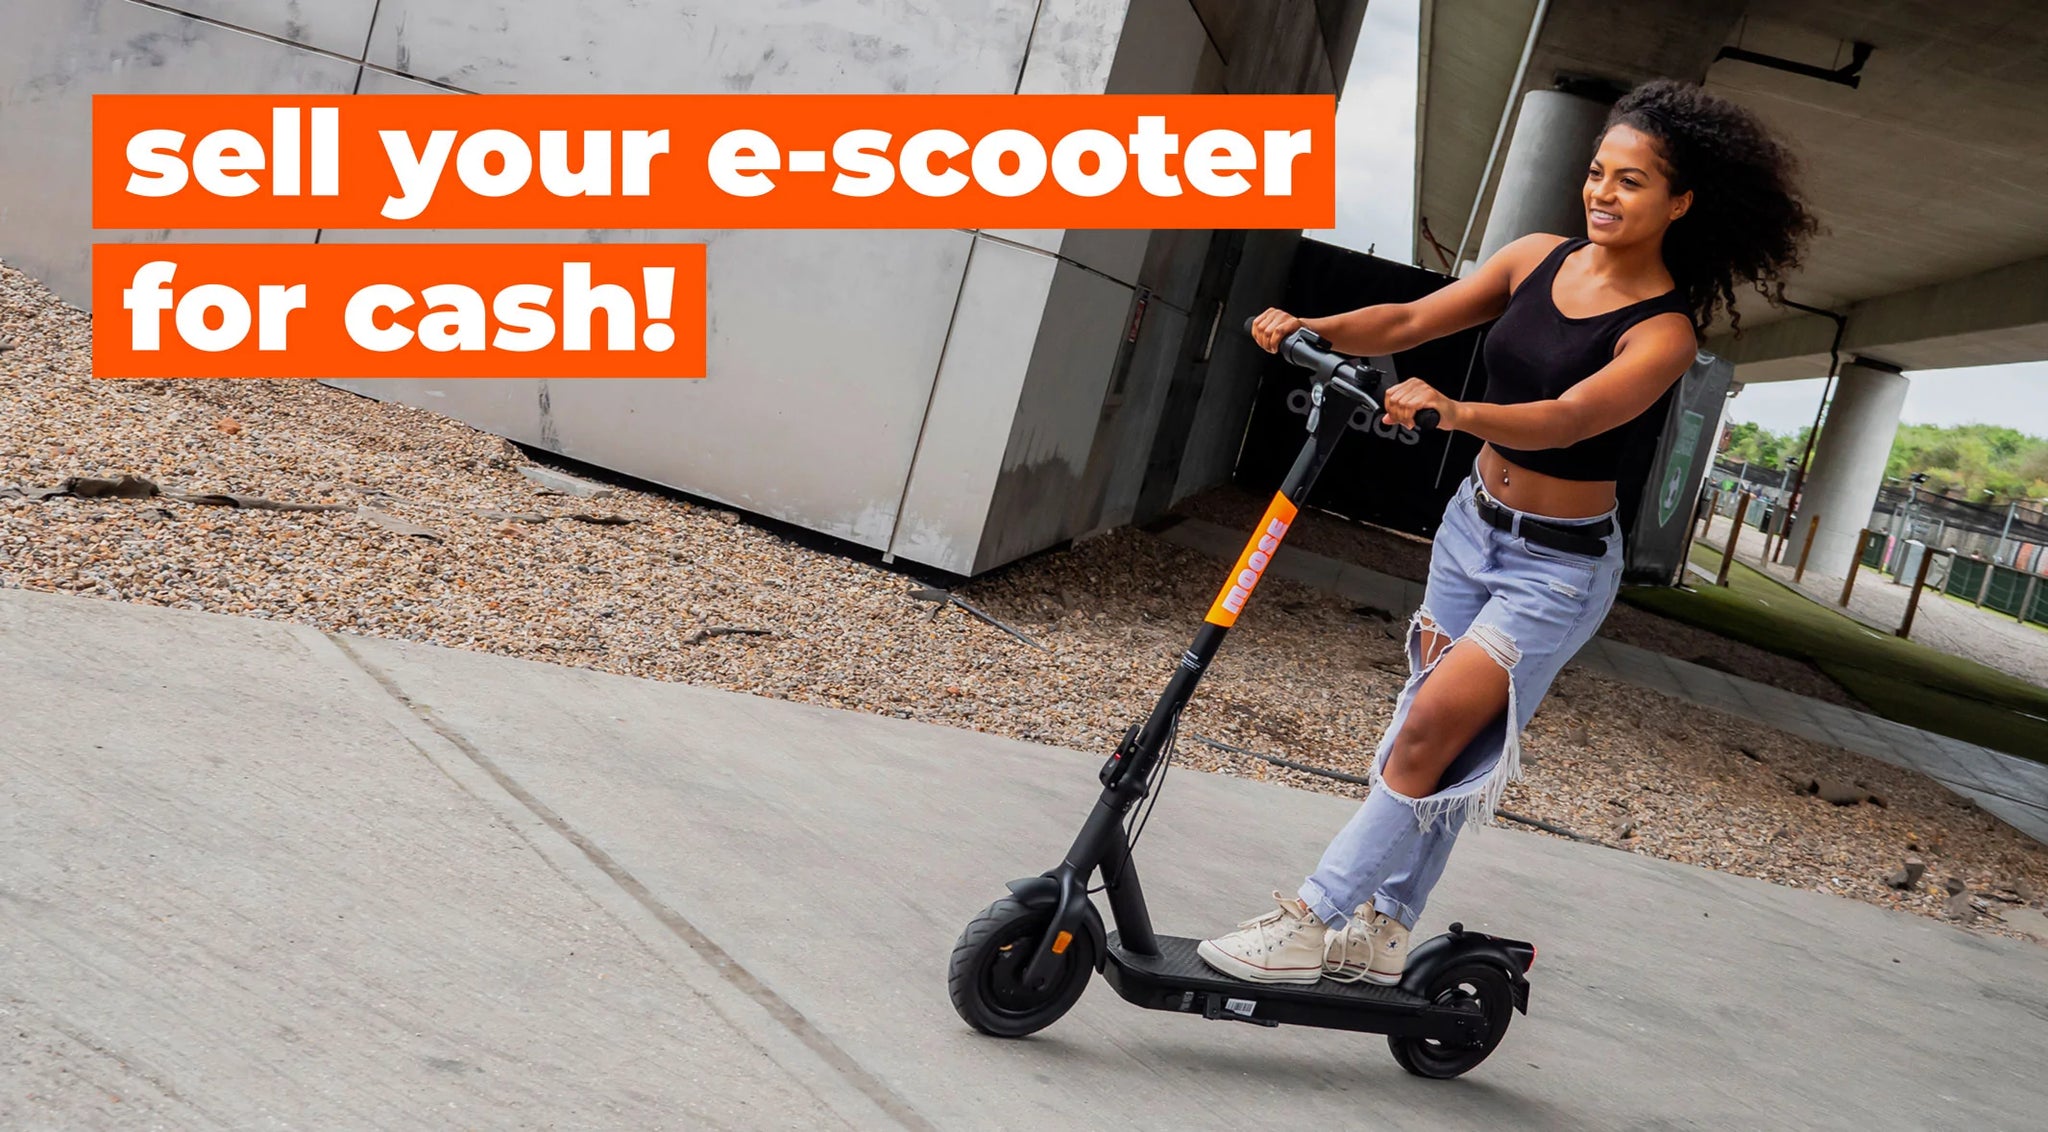 E-scooter trade-in